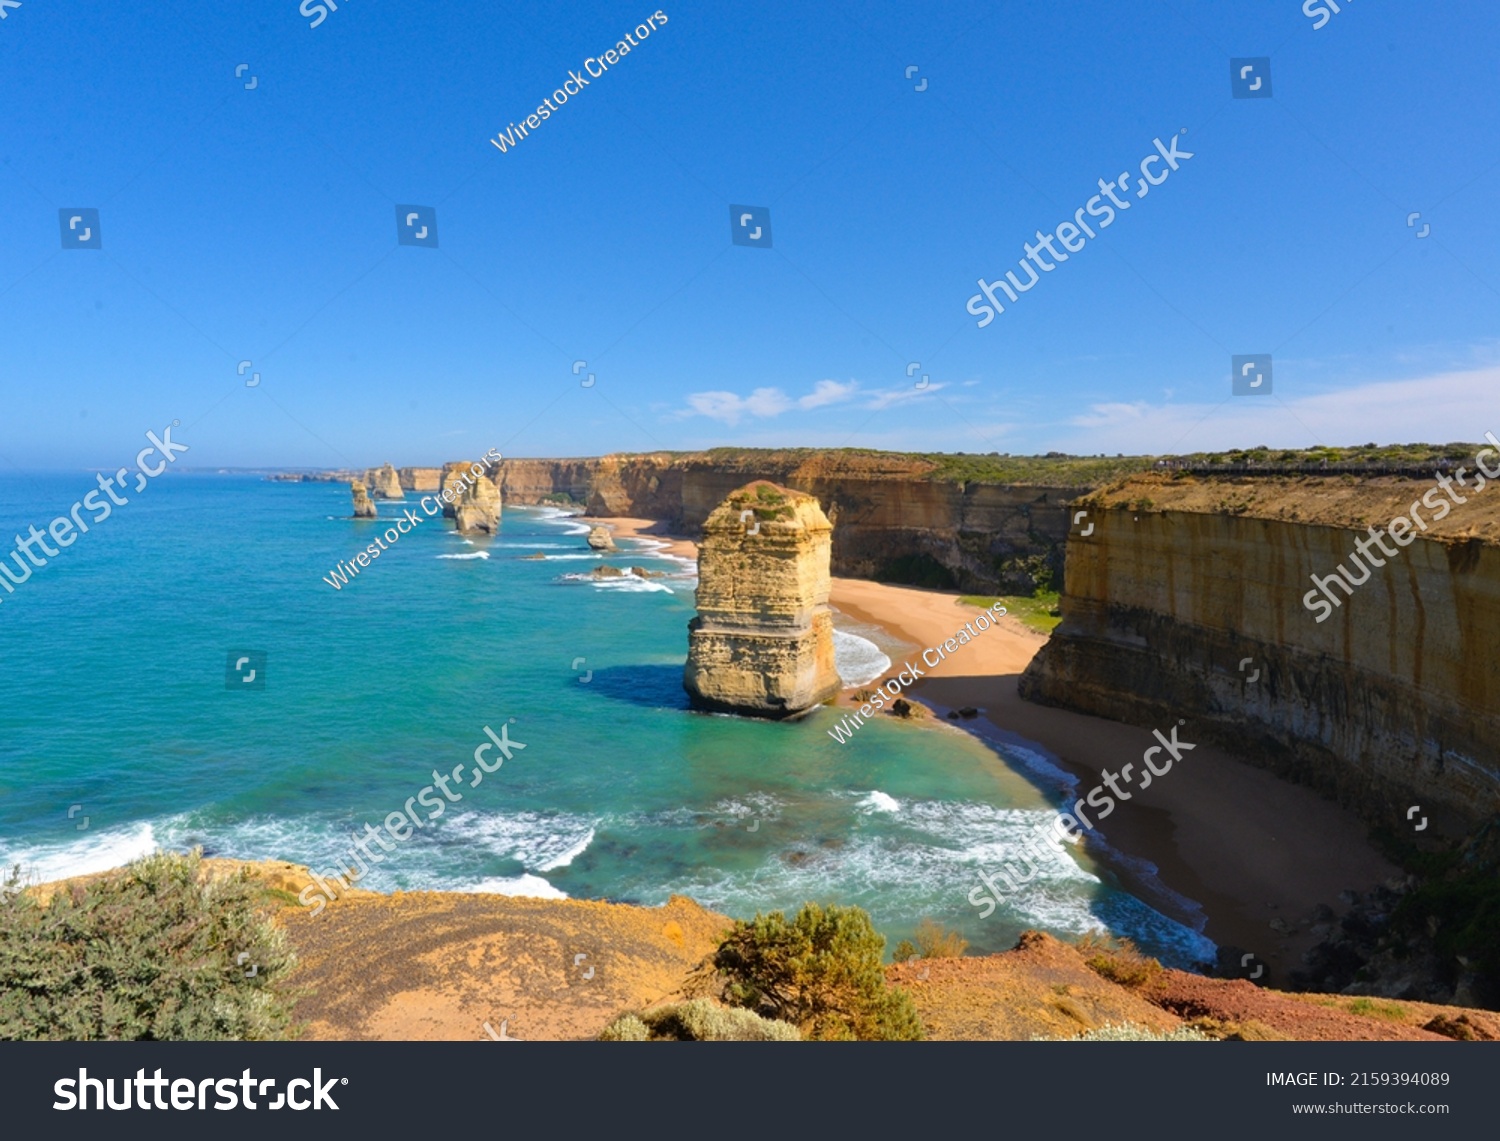 A beautiful view of Twelve Apostles rock formations, Great Ocean Road, Victoria, Australia #2159394089